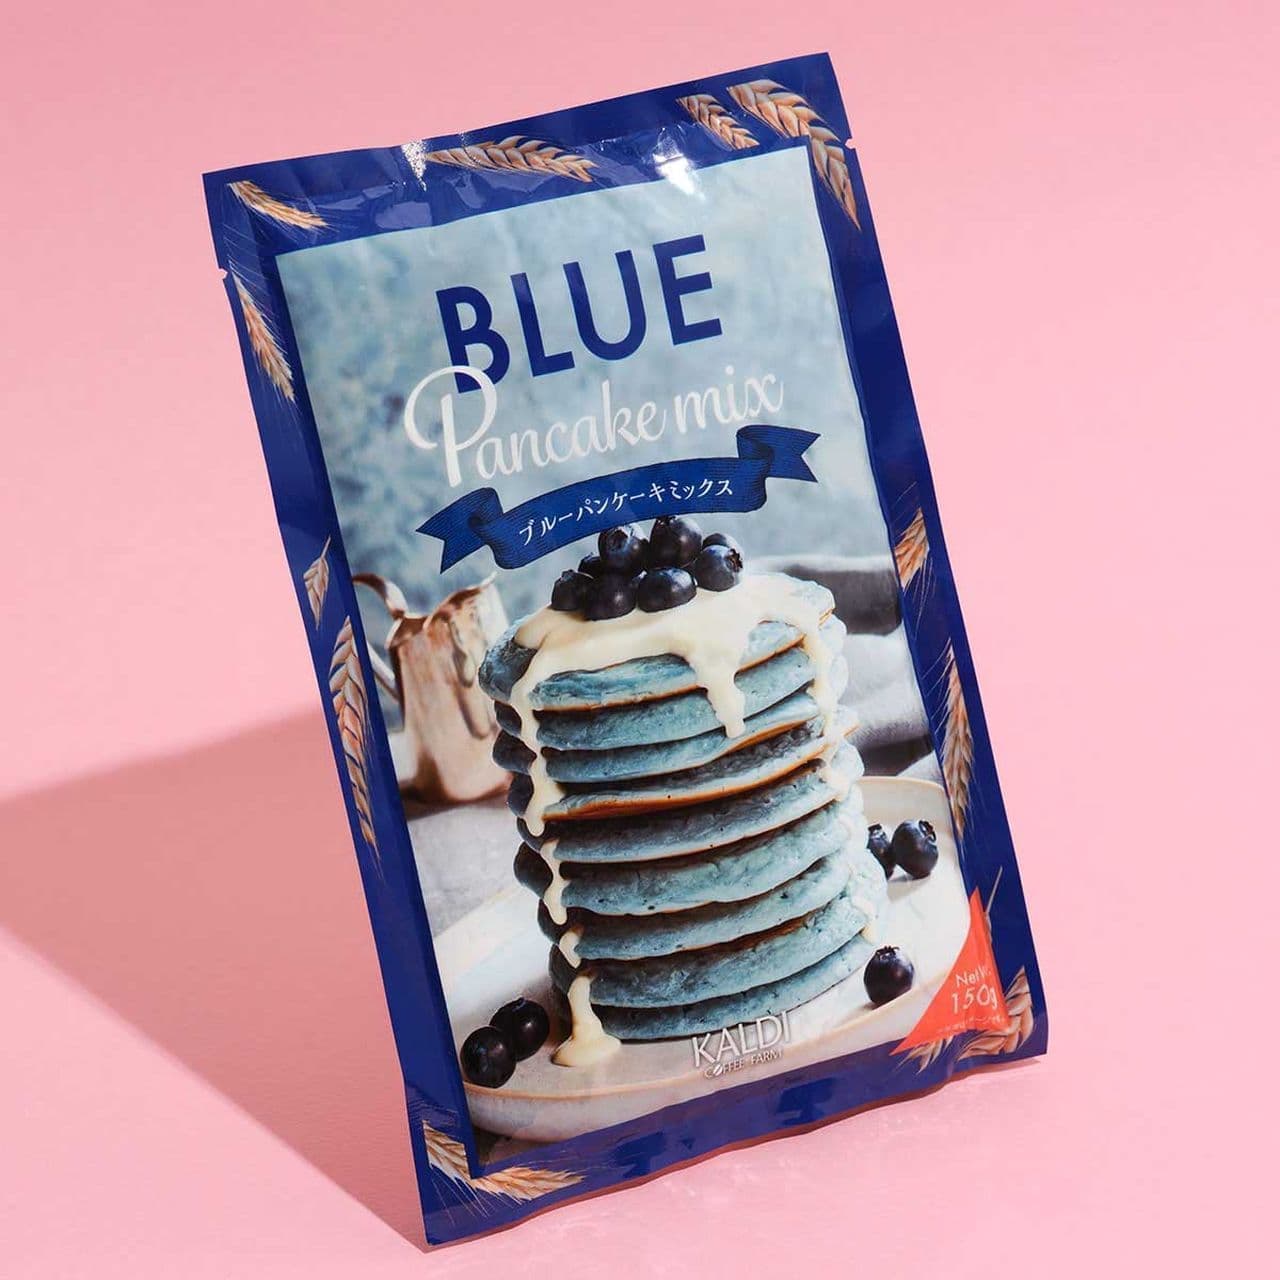 KALDI Coffee Farm "Original Blue Pancake Mix